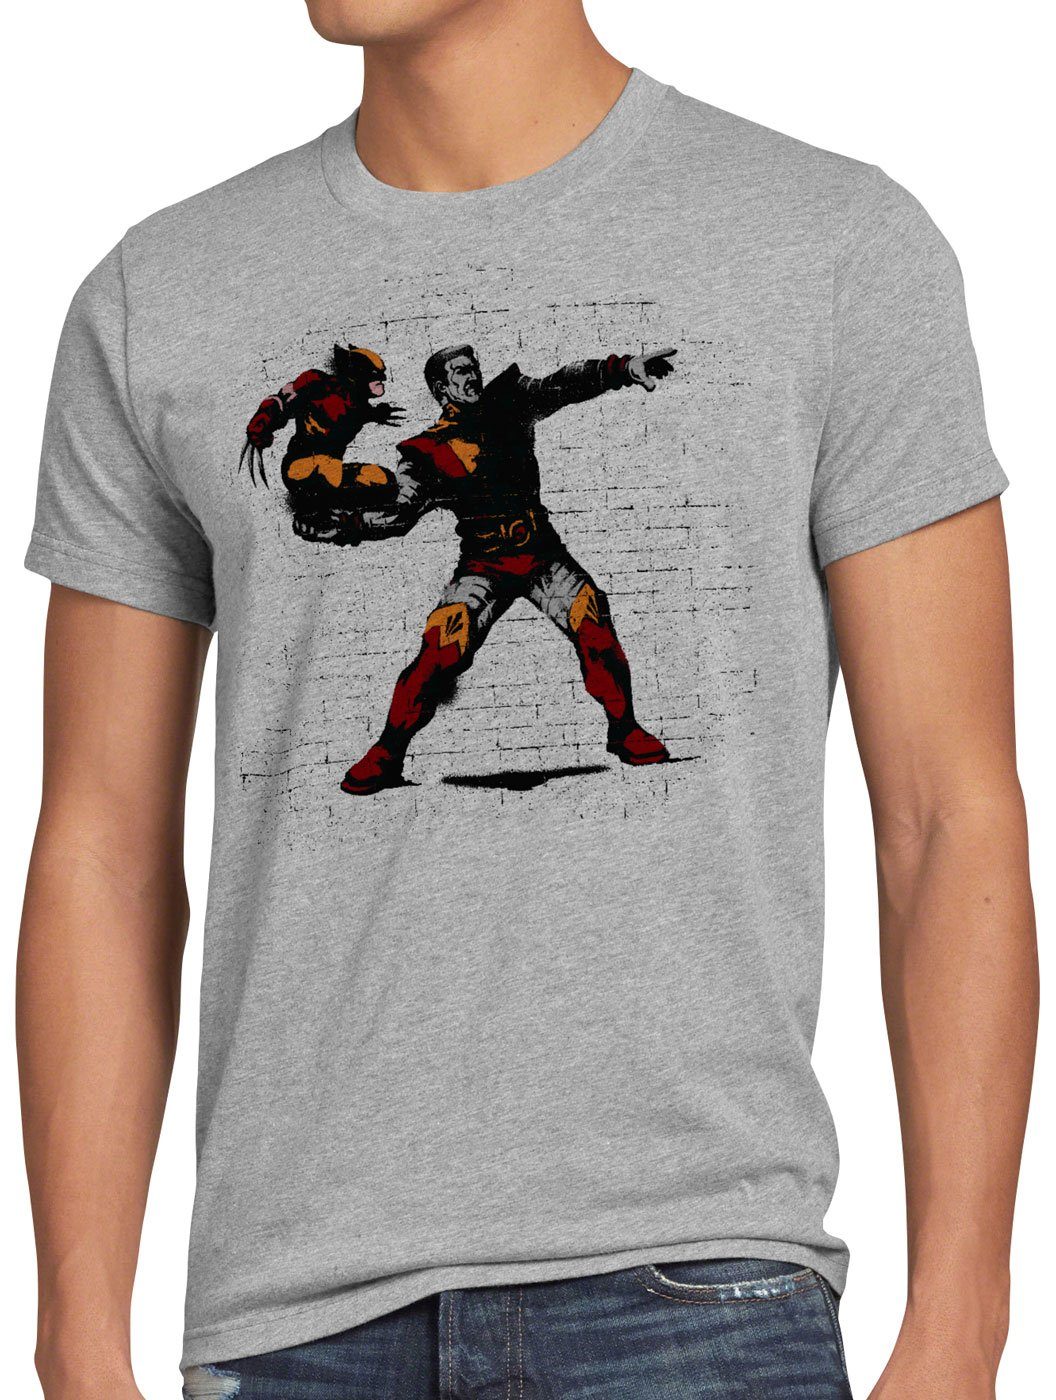 style3 Print-Shirt Pitch Herren kino comic mutant T-Shirt meliert grau Wolverine banksy